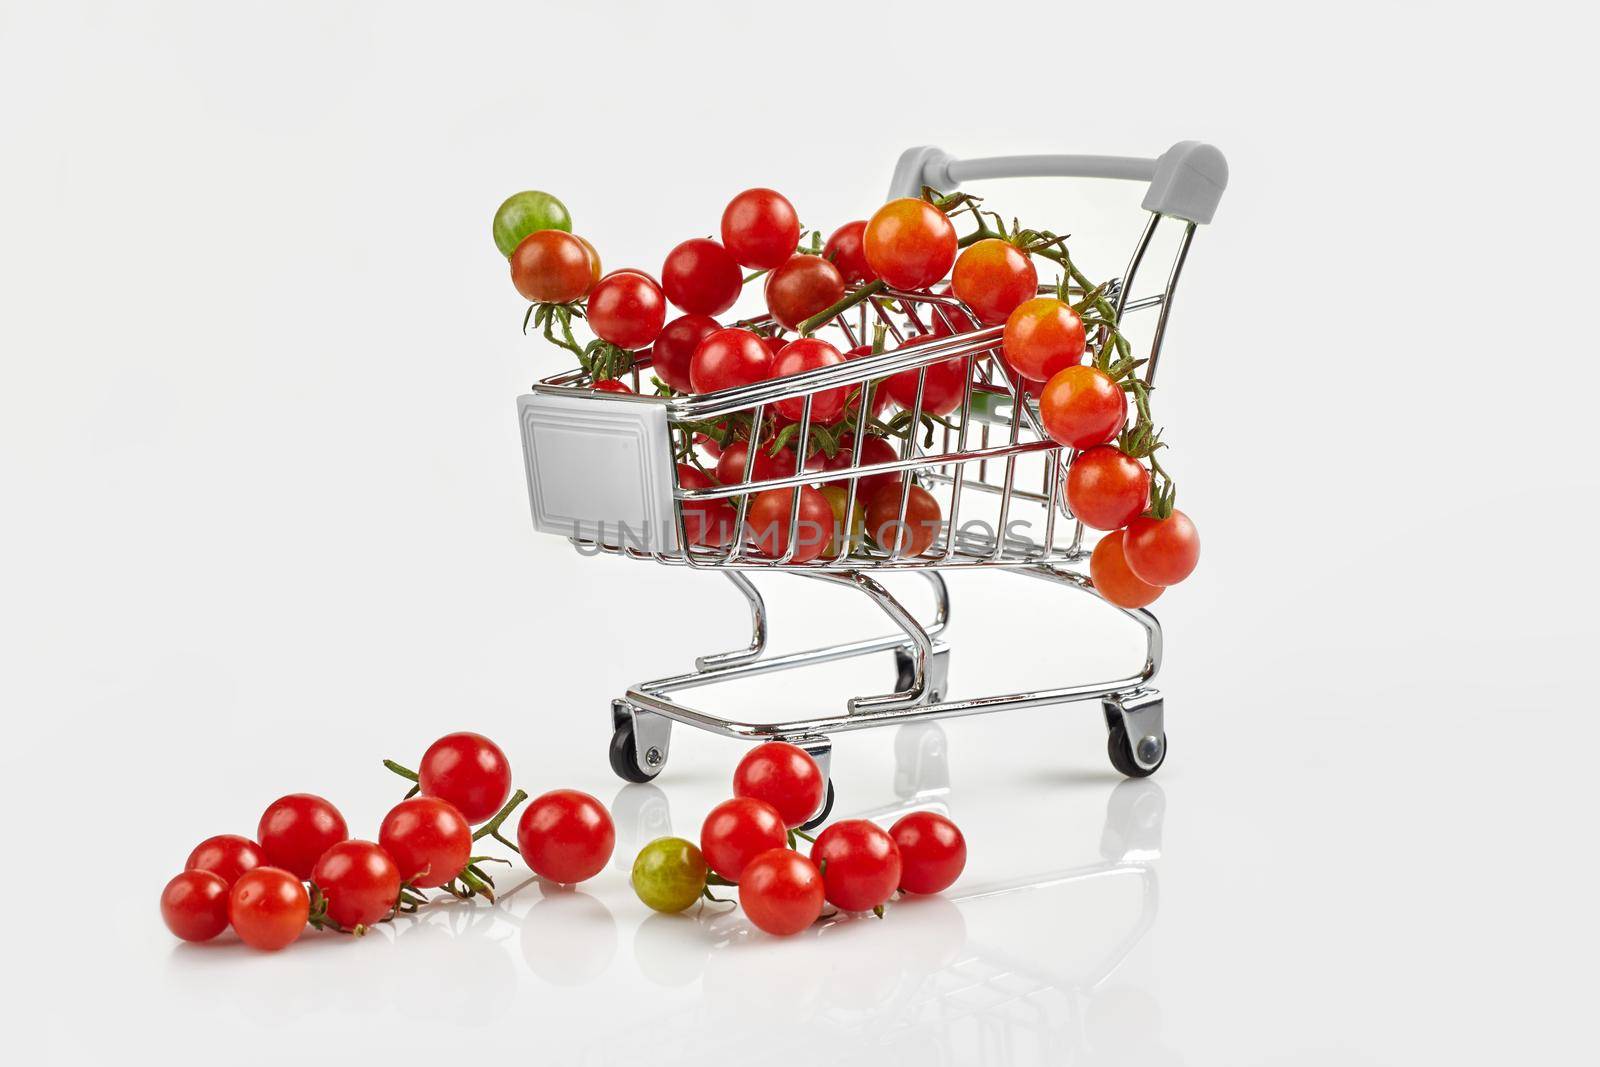 Mini shopping cart full with cherry tomatos on white background by nazarovsergey